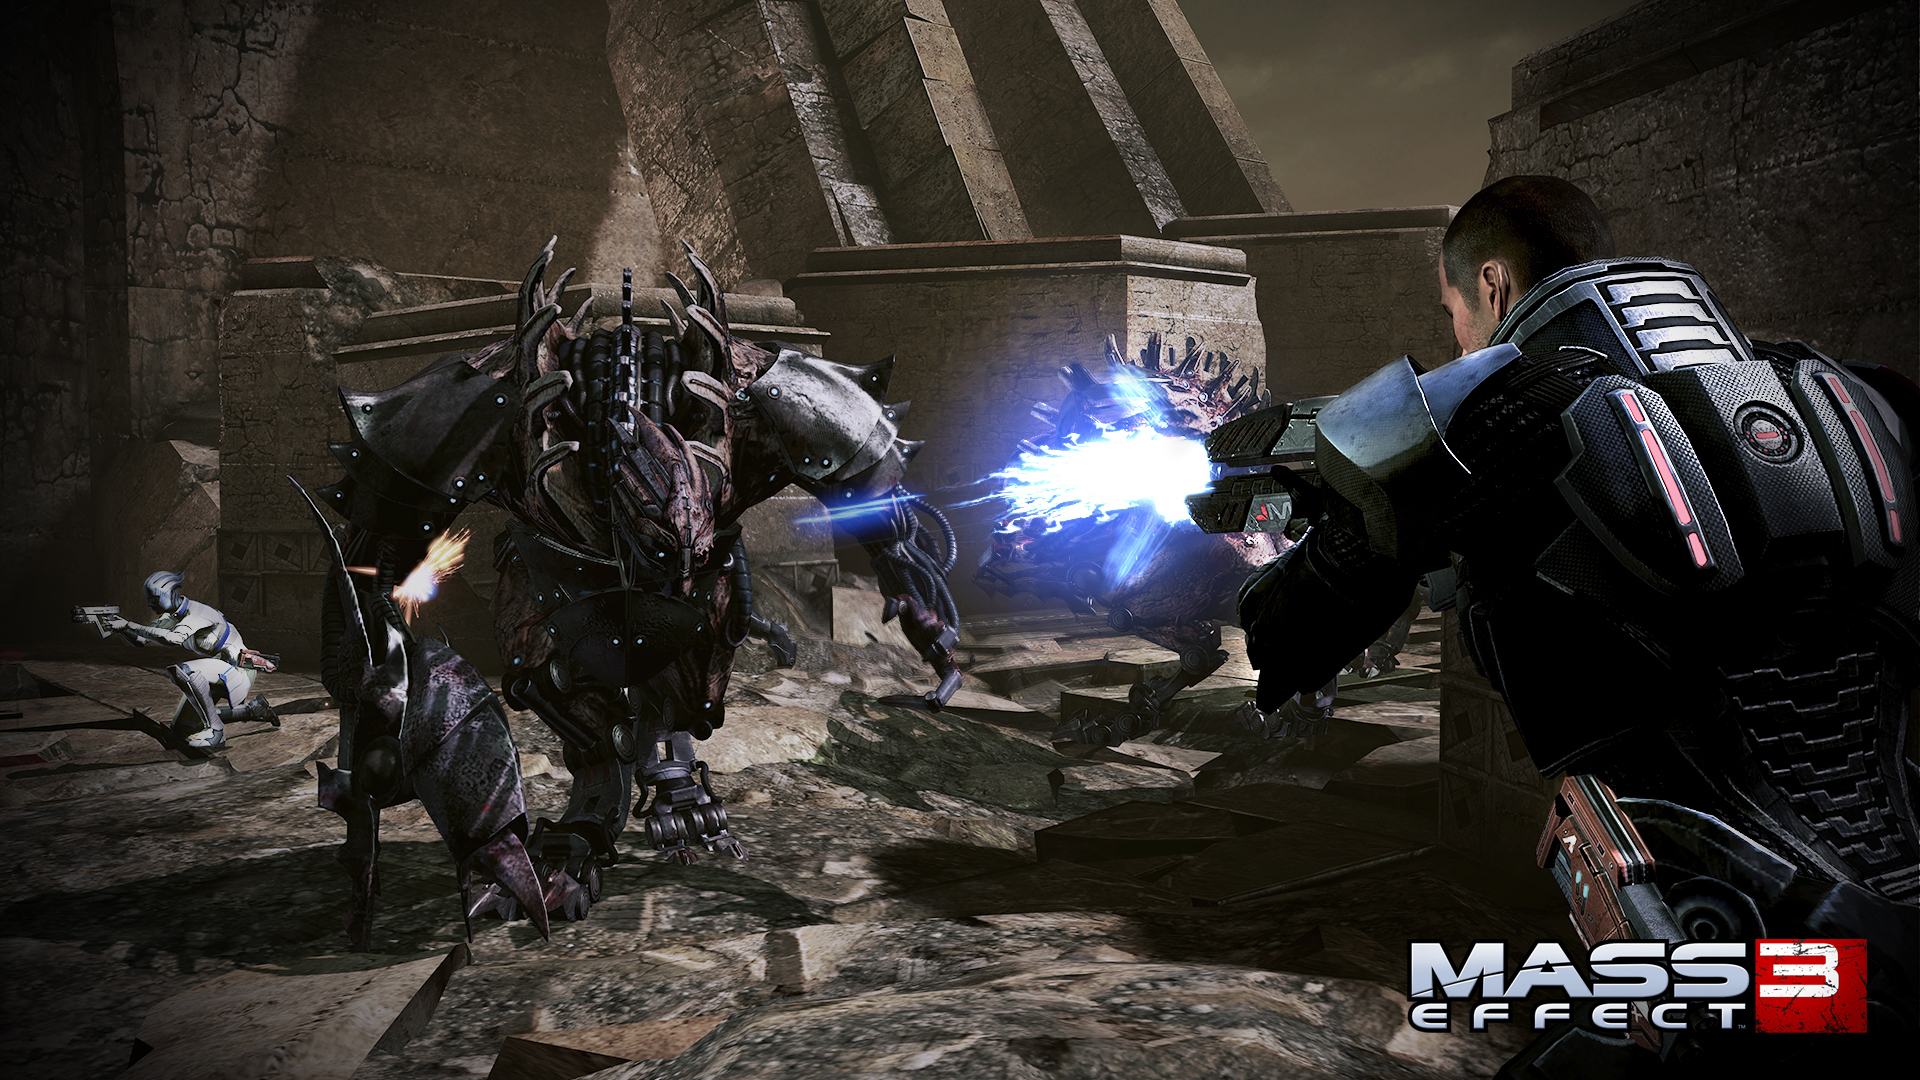 1920x1080 Mass Effect Mass Effect 3 videojuego Juegos